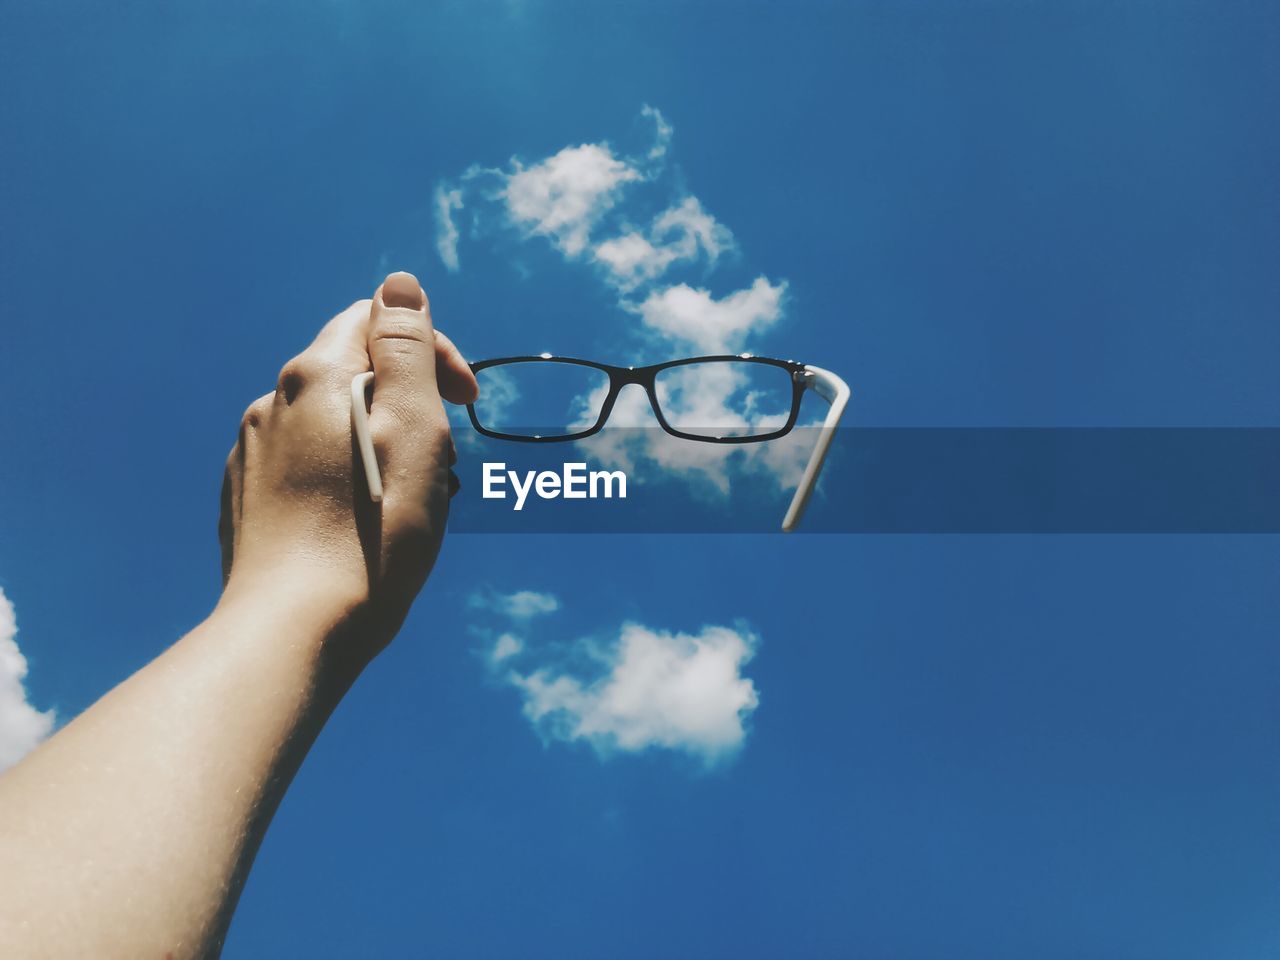 Cropped image of hand holding eyeglasses against blue sky